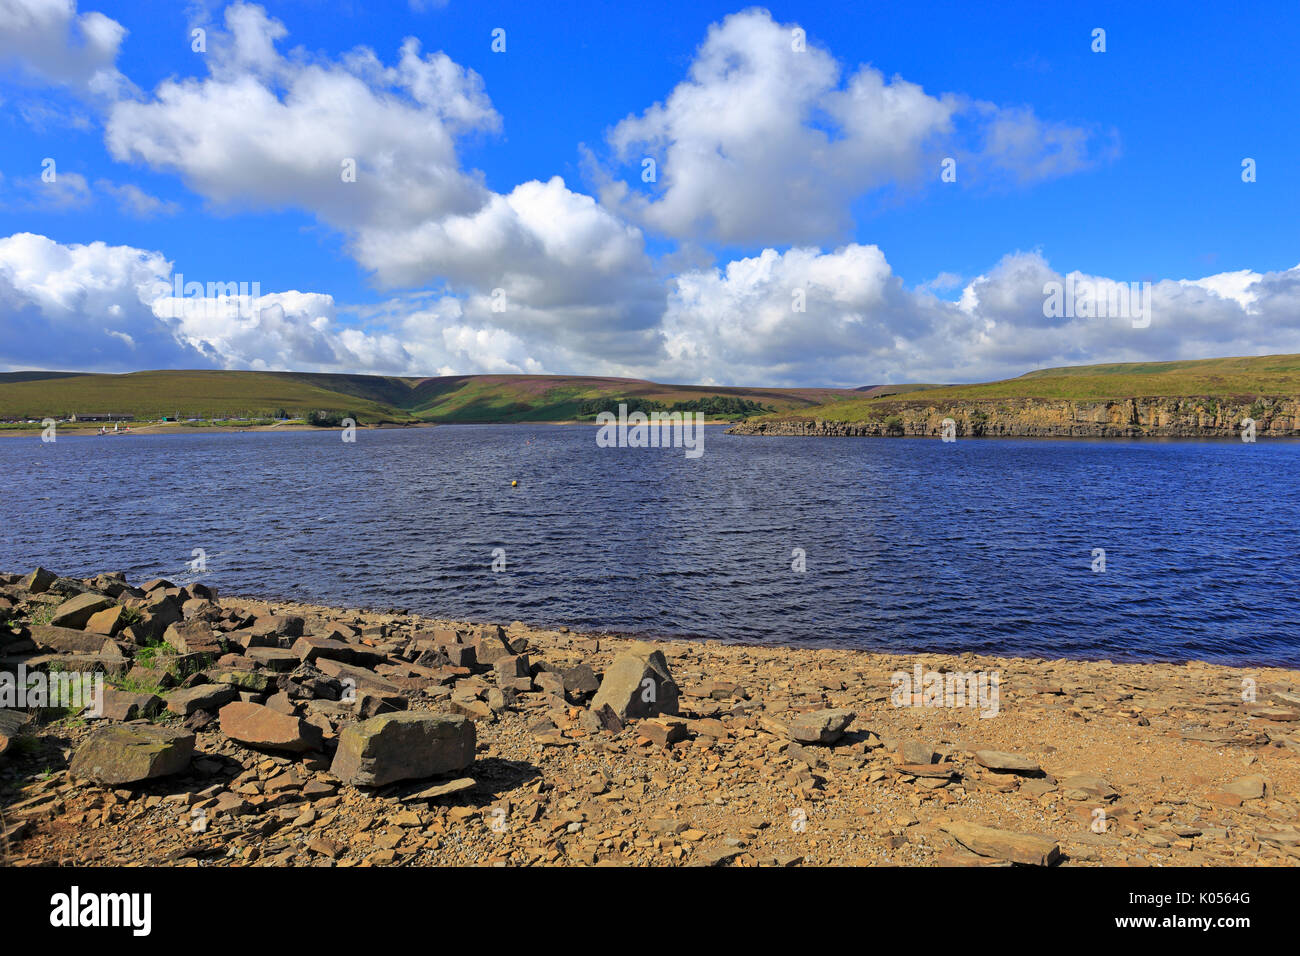 Winscar Reservoir, Peak District Mitgliedstats Park, Barnsley, South Yorkshire, England, UK. Stockfoto